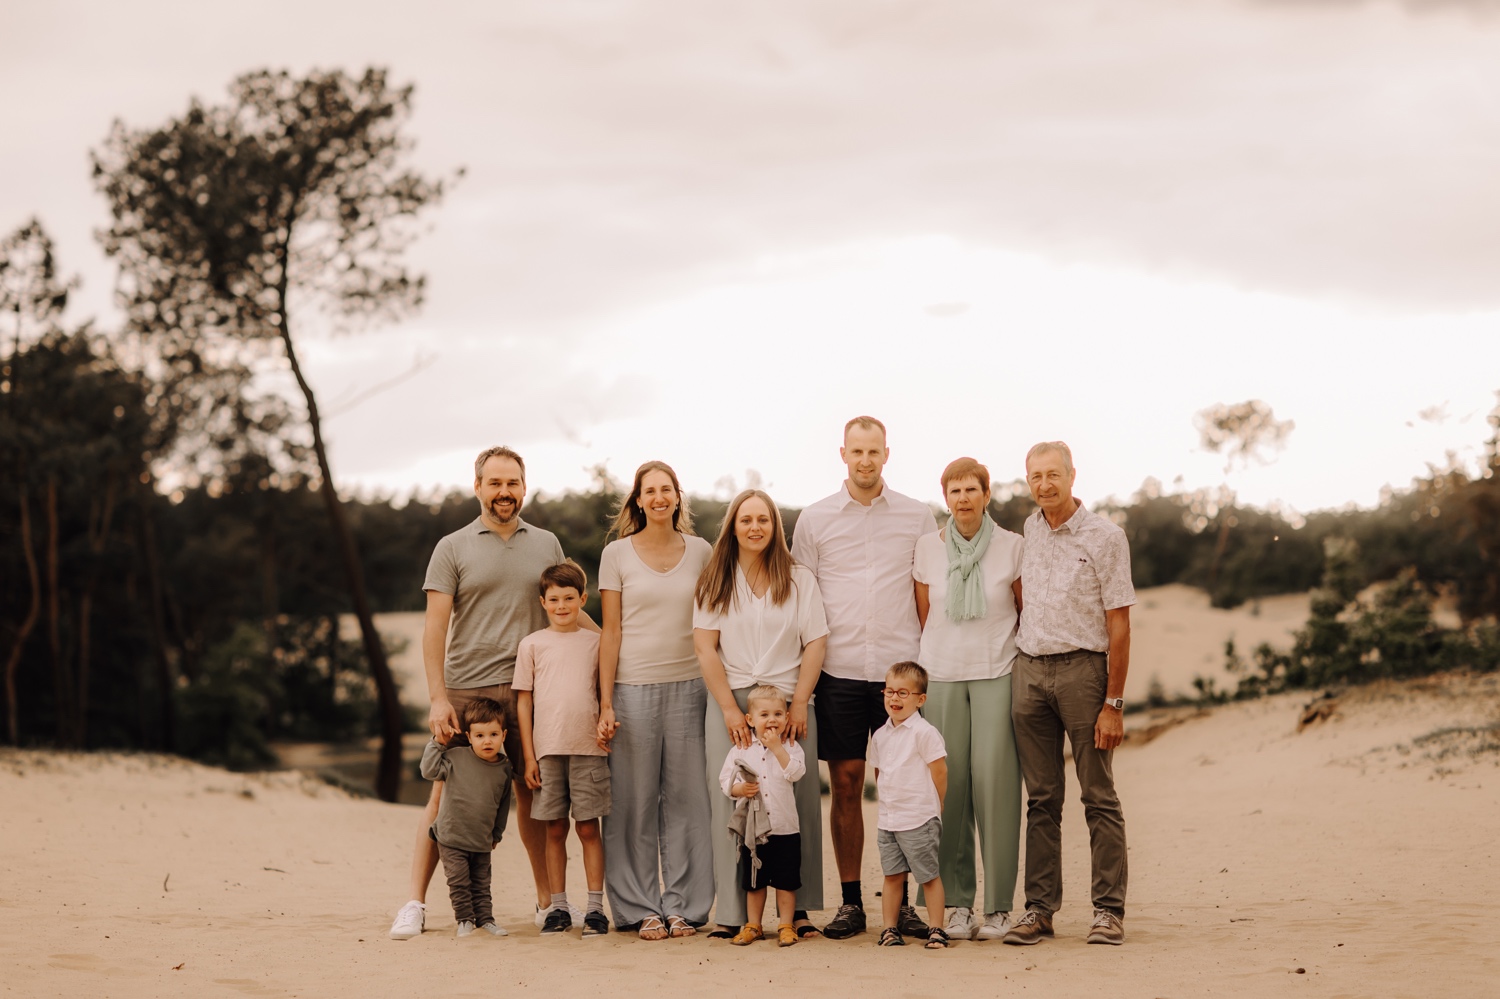 gezinsfotograaf Limburg - groepsfoto met het hele gezin